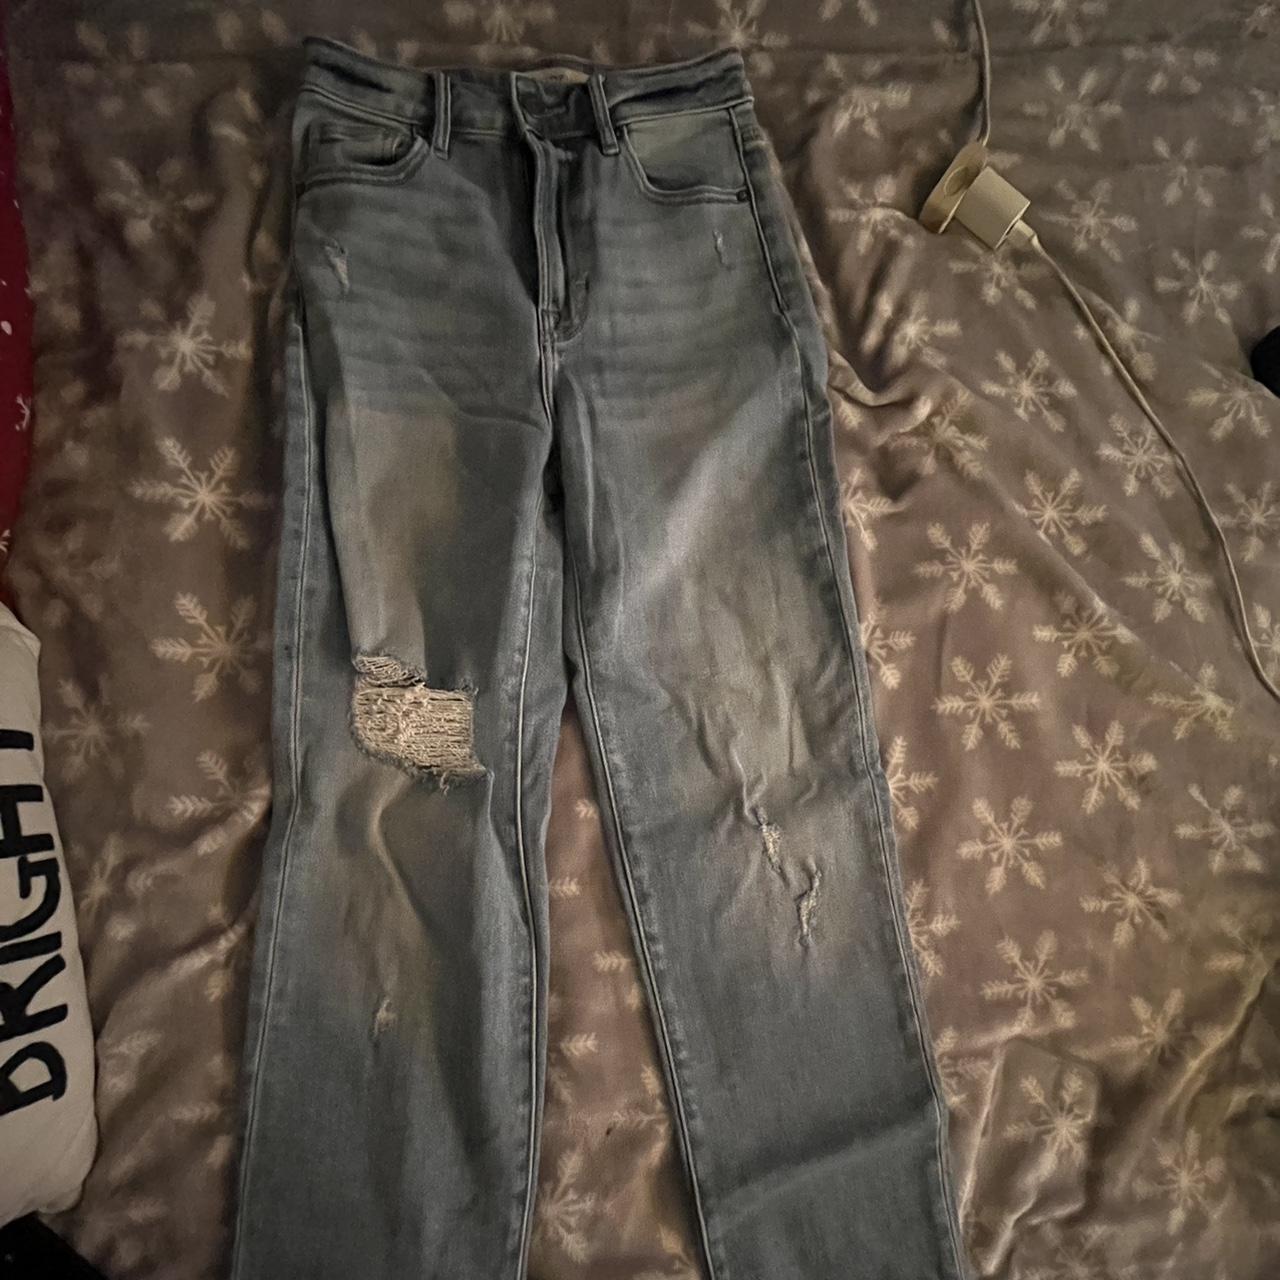 Hidden ripped straight leg jeans wasit size 24 - Depop